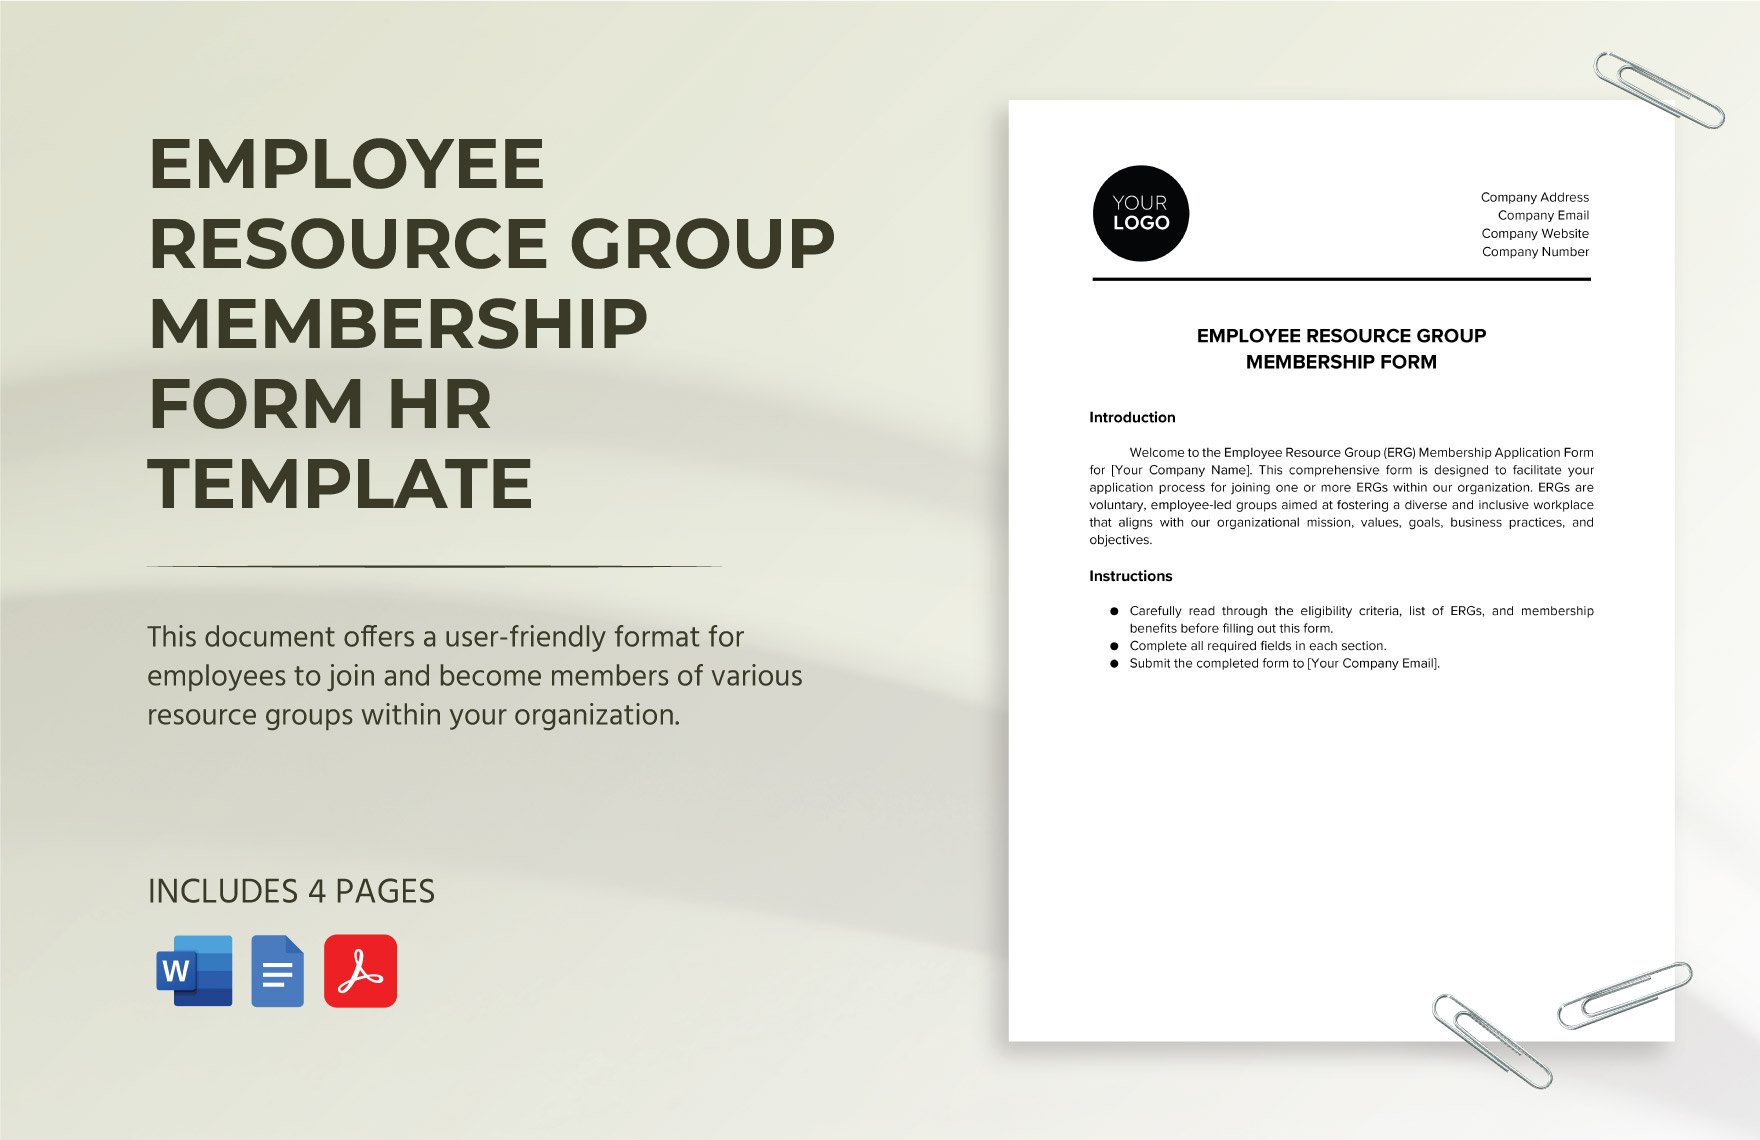 Employee Resource Group Membership Form HR Template in Word, Google Docs, PDF